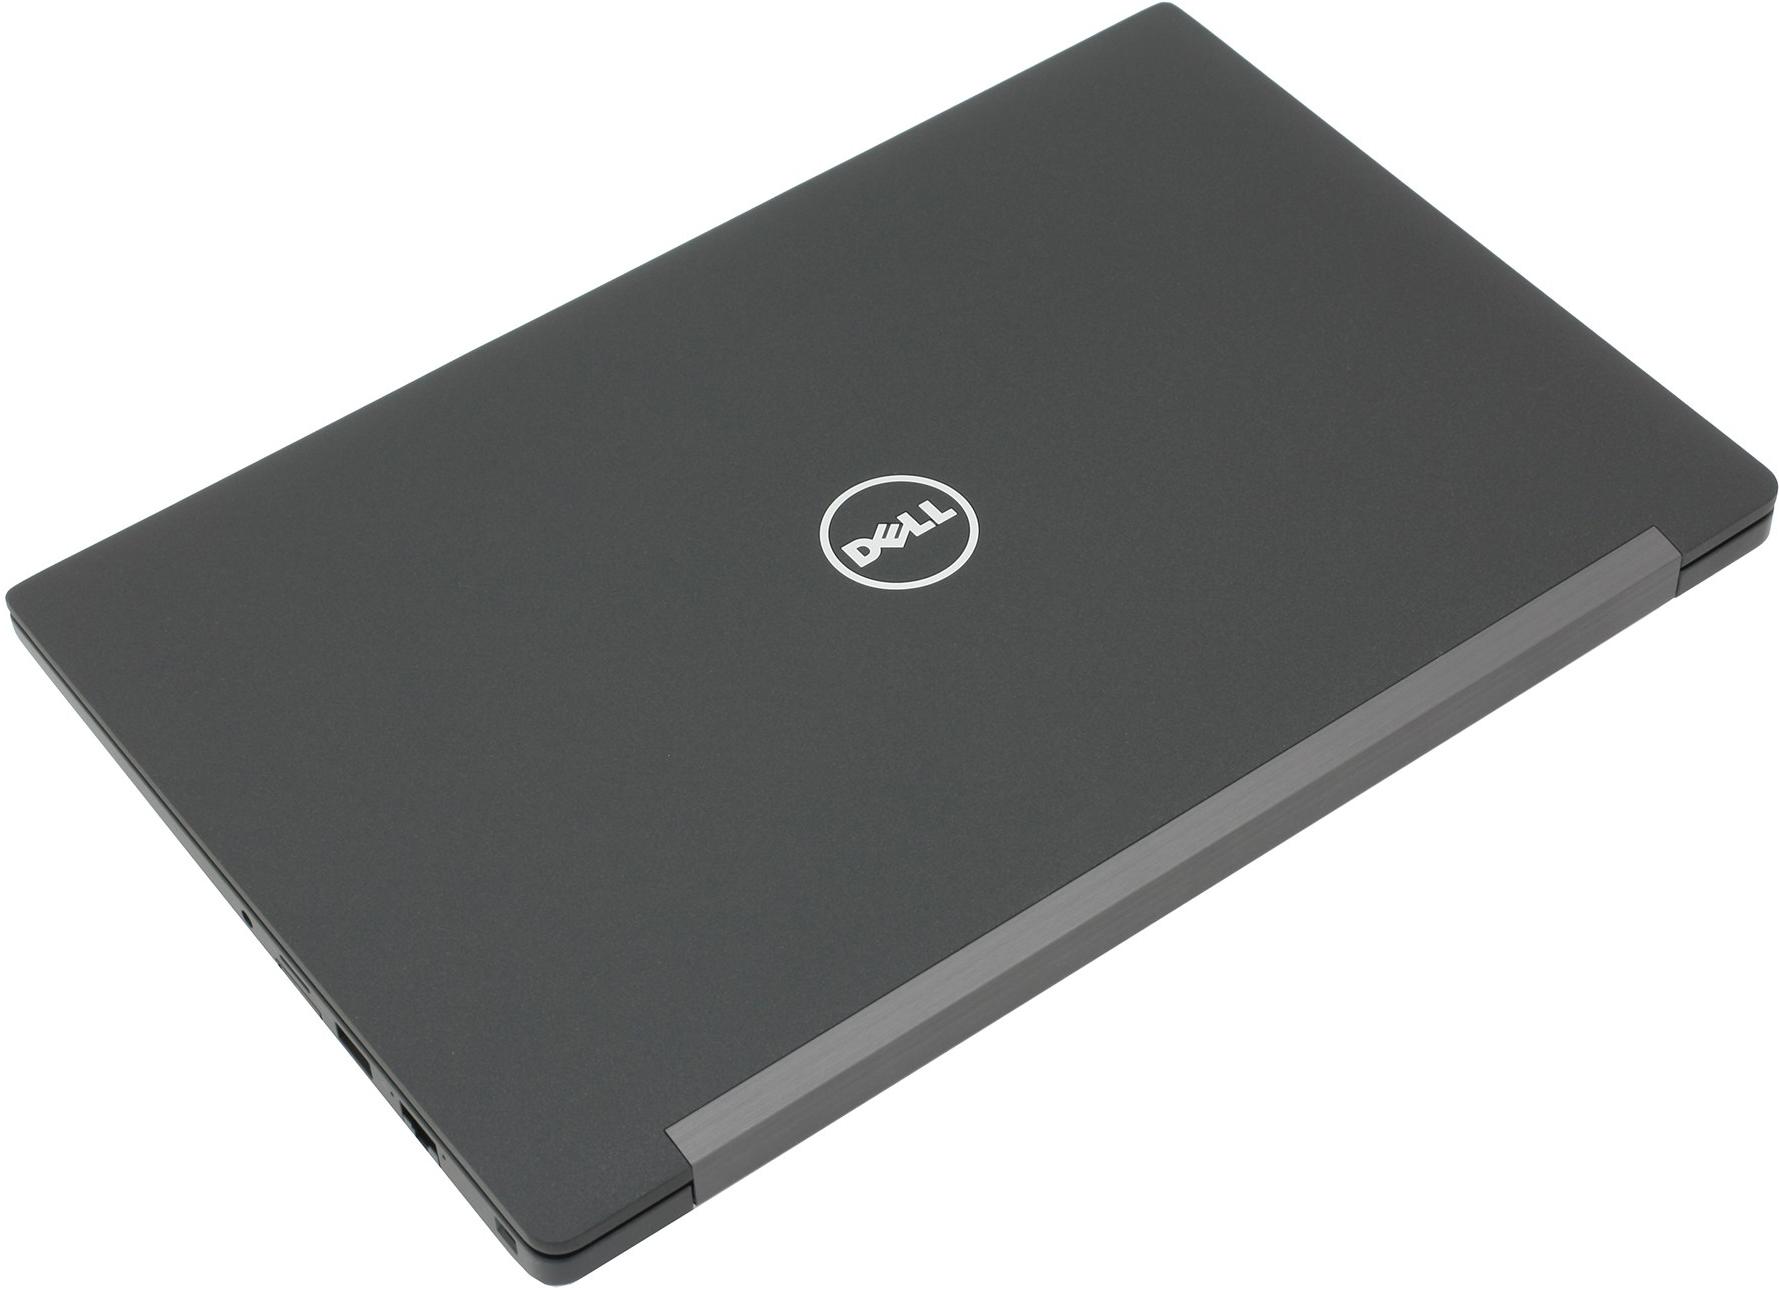 Ноутбук Dell Latitude 7480 Цена